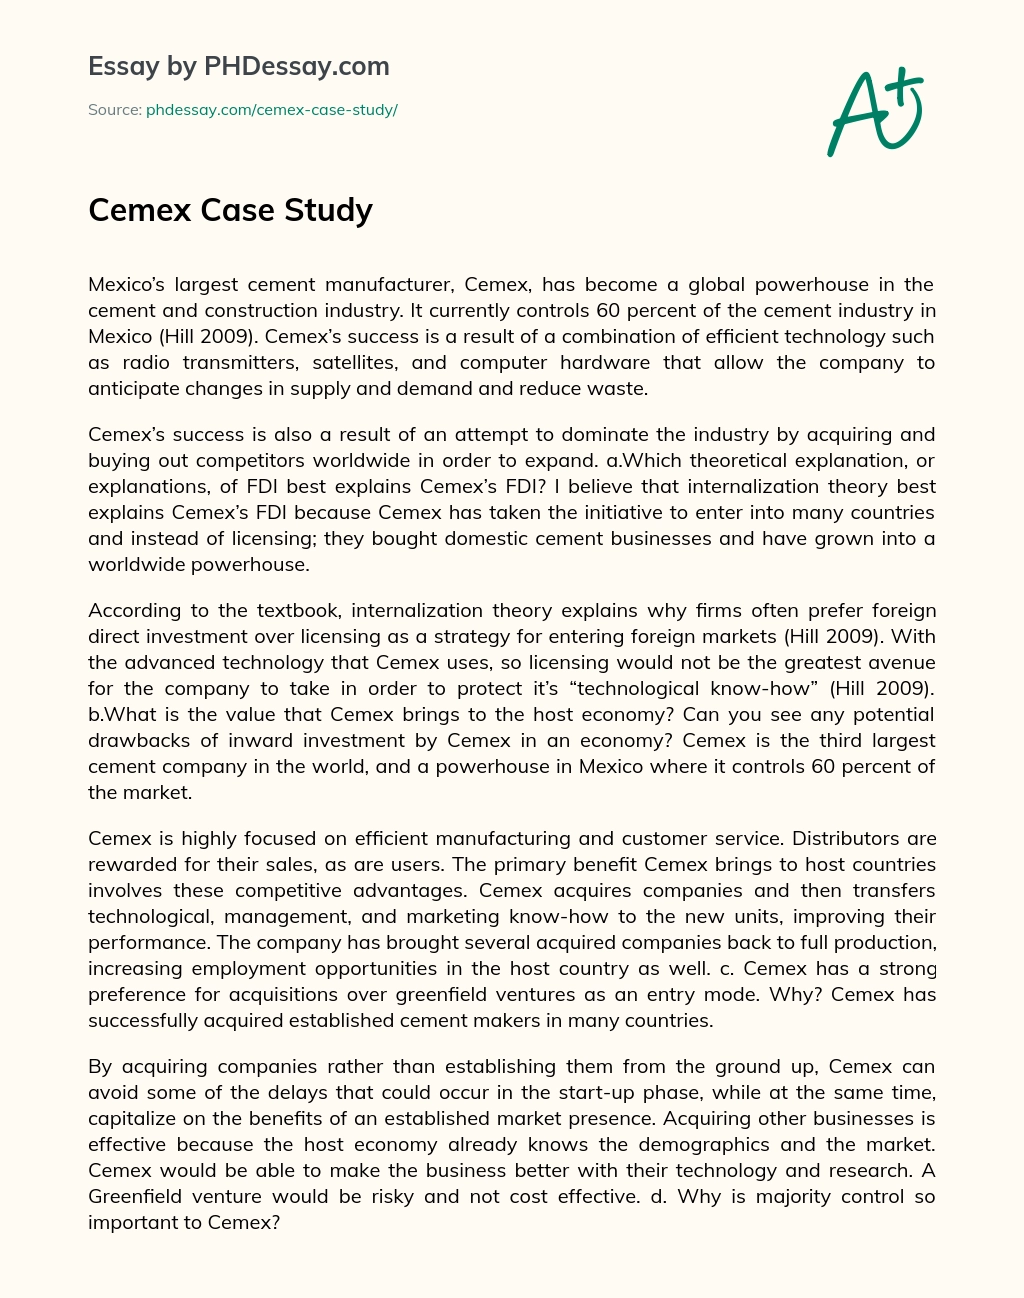 Cemex Case Study essay